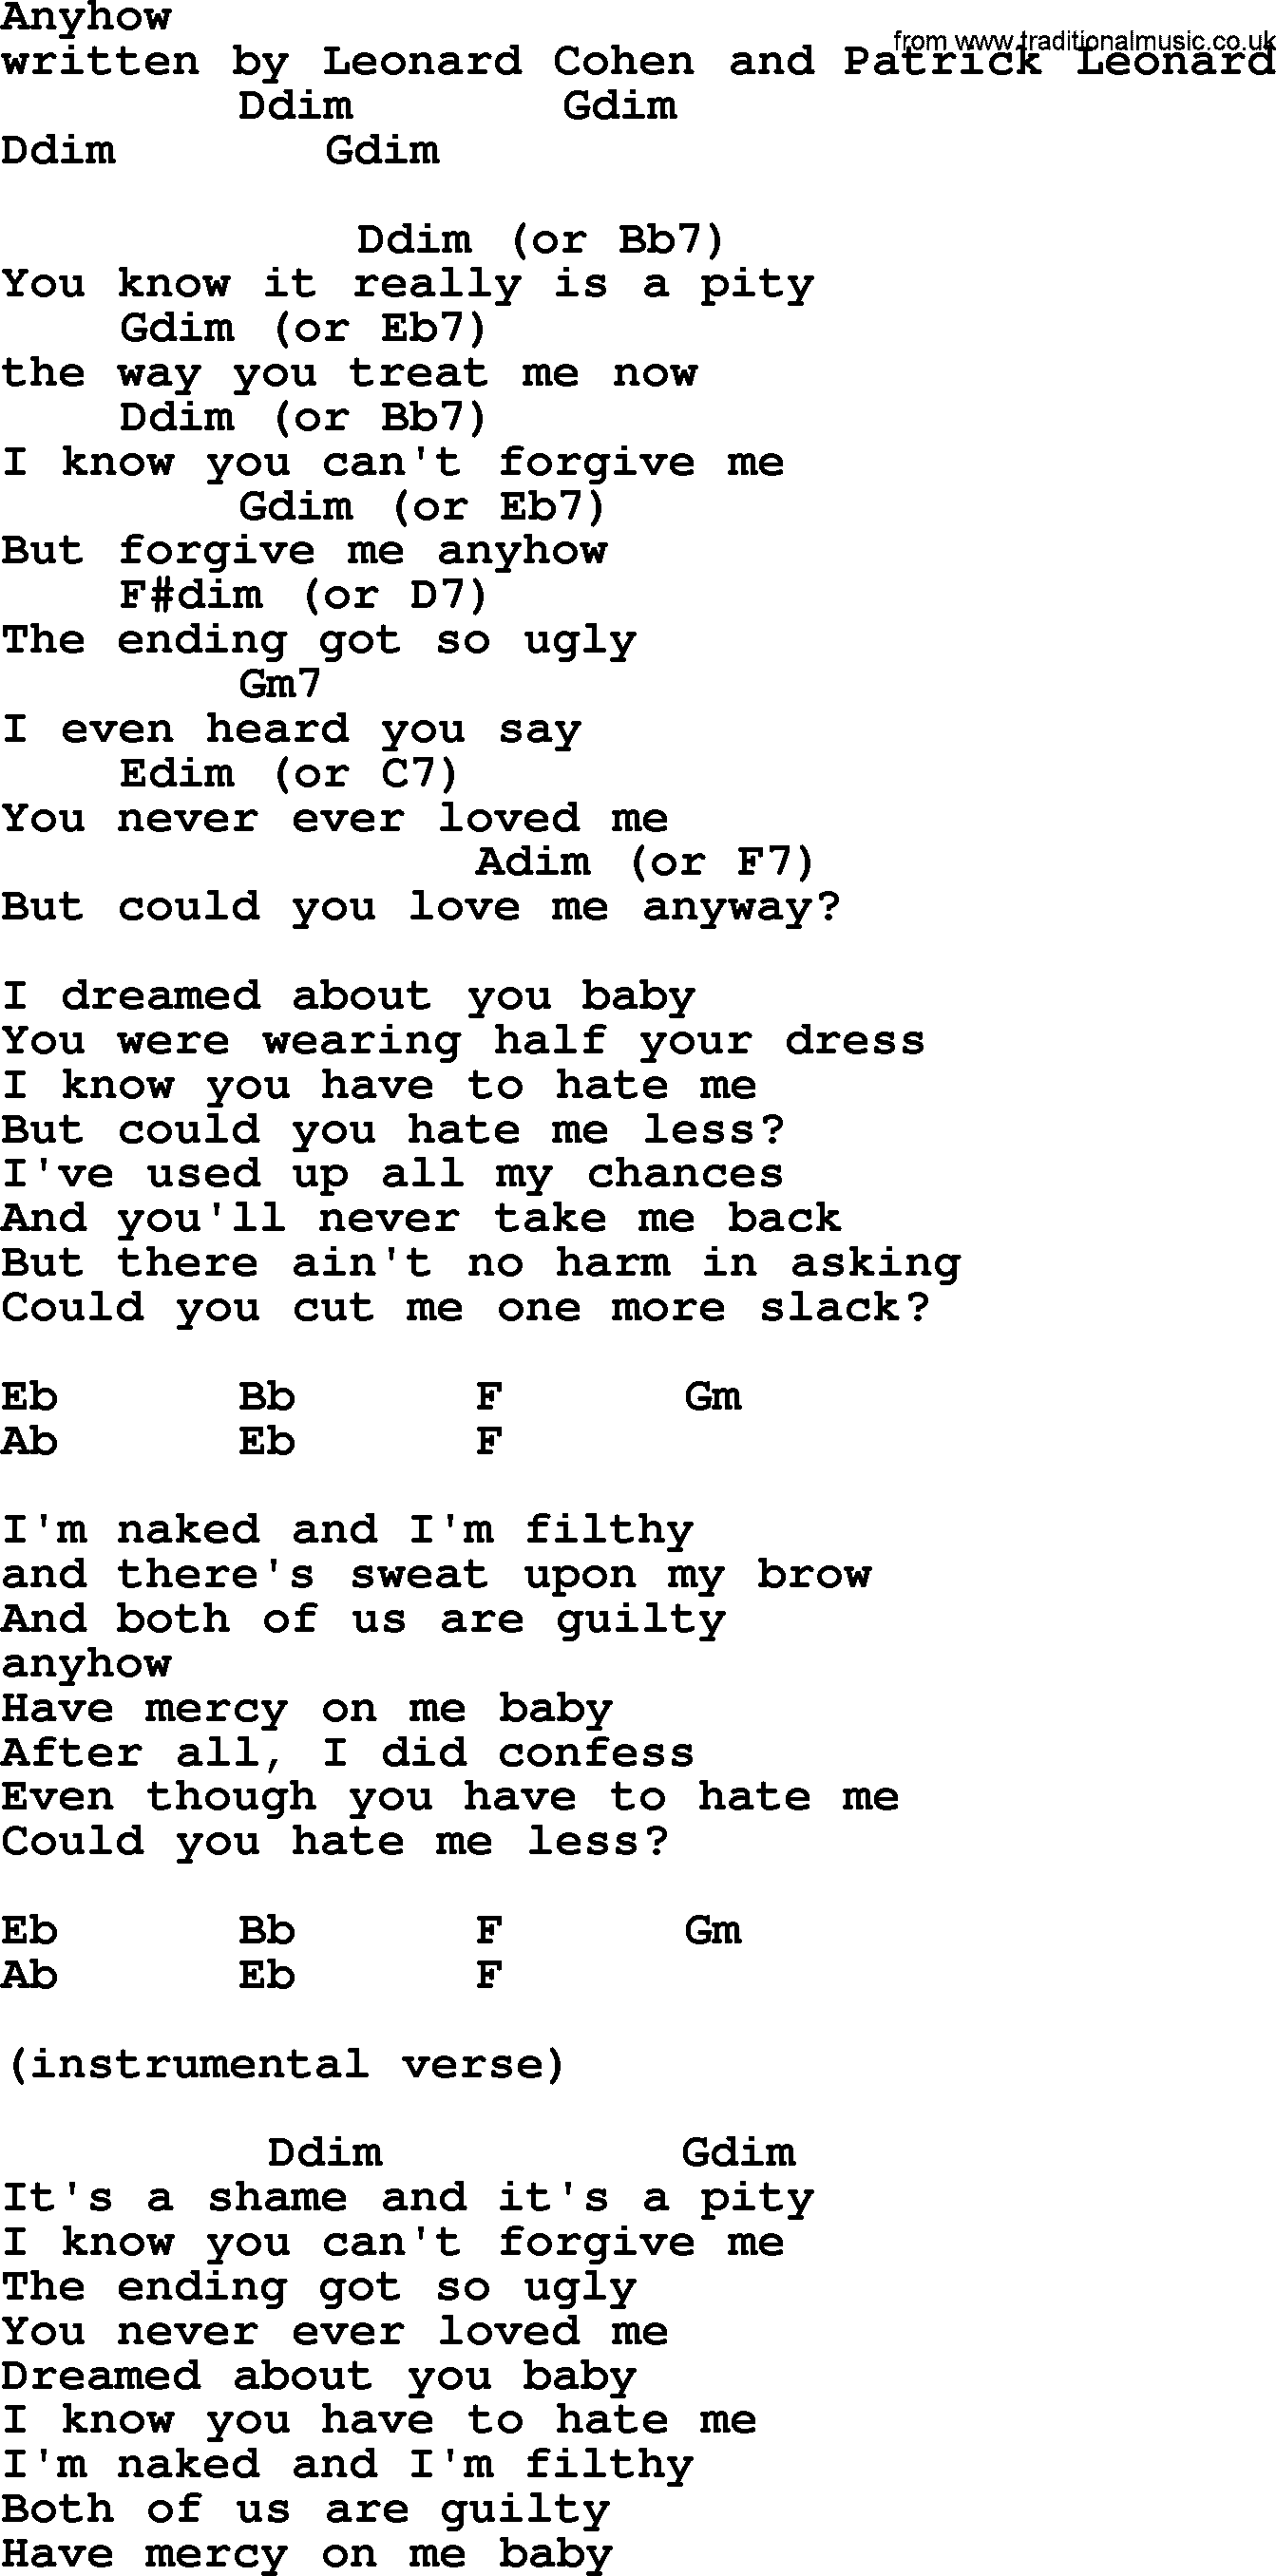 Leonard Cohen song Anyhow, lyrics and chords